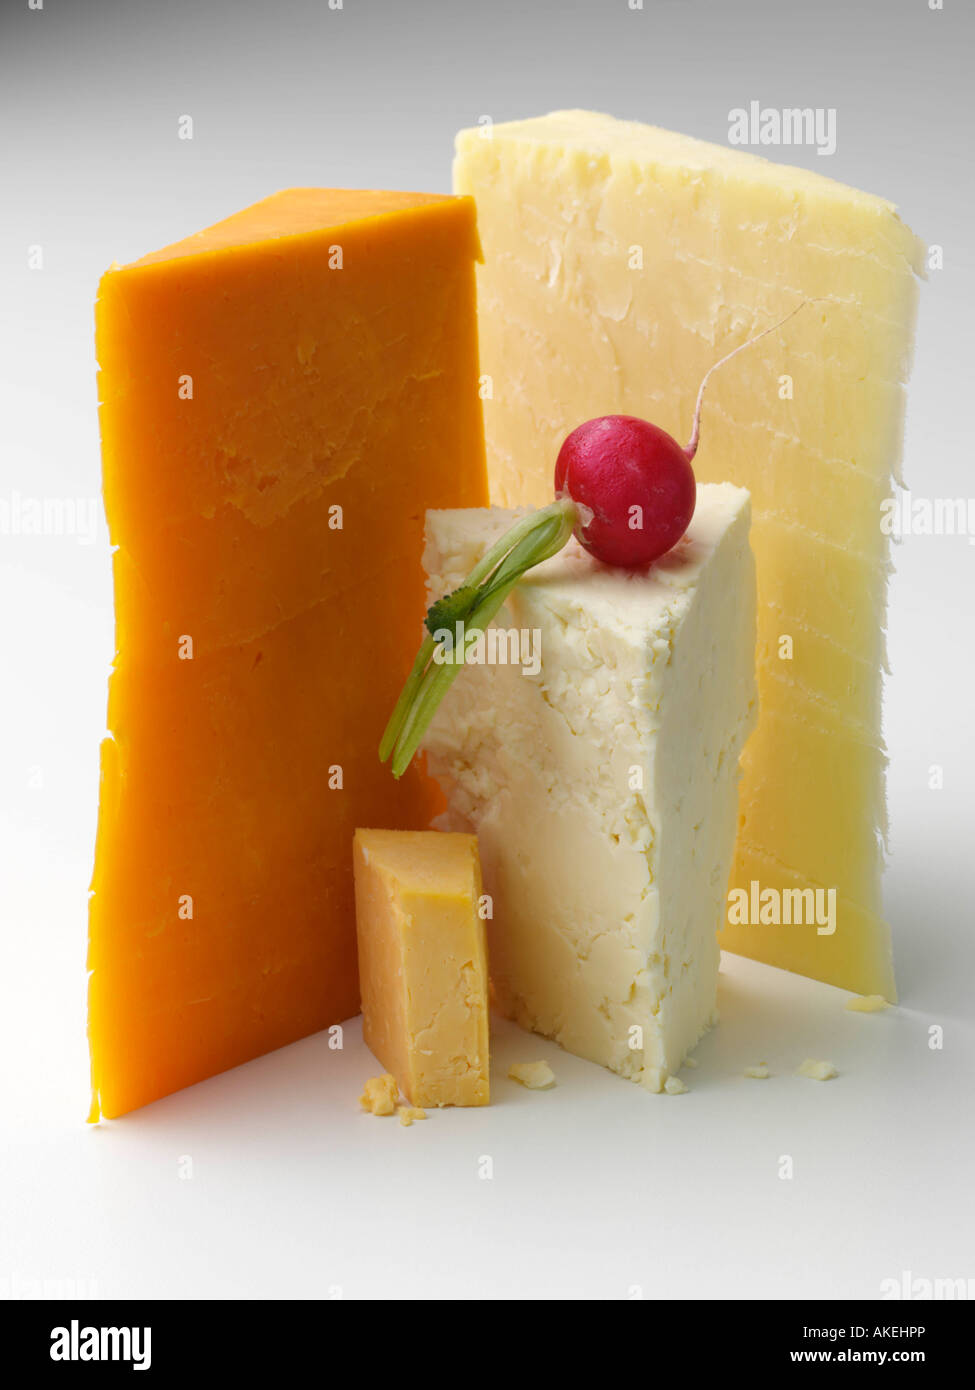 British cheeses still life editorial food Stock Photo